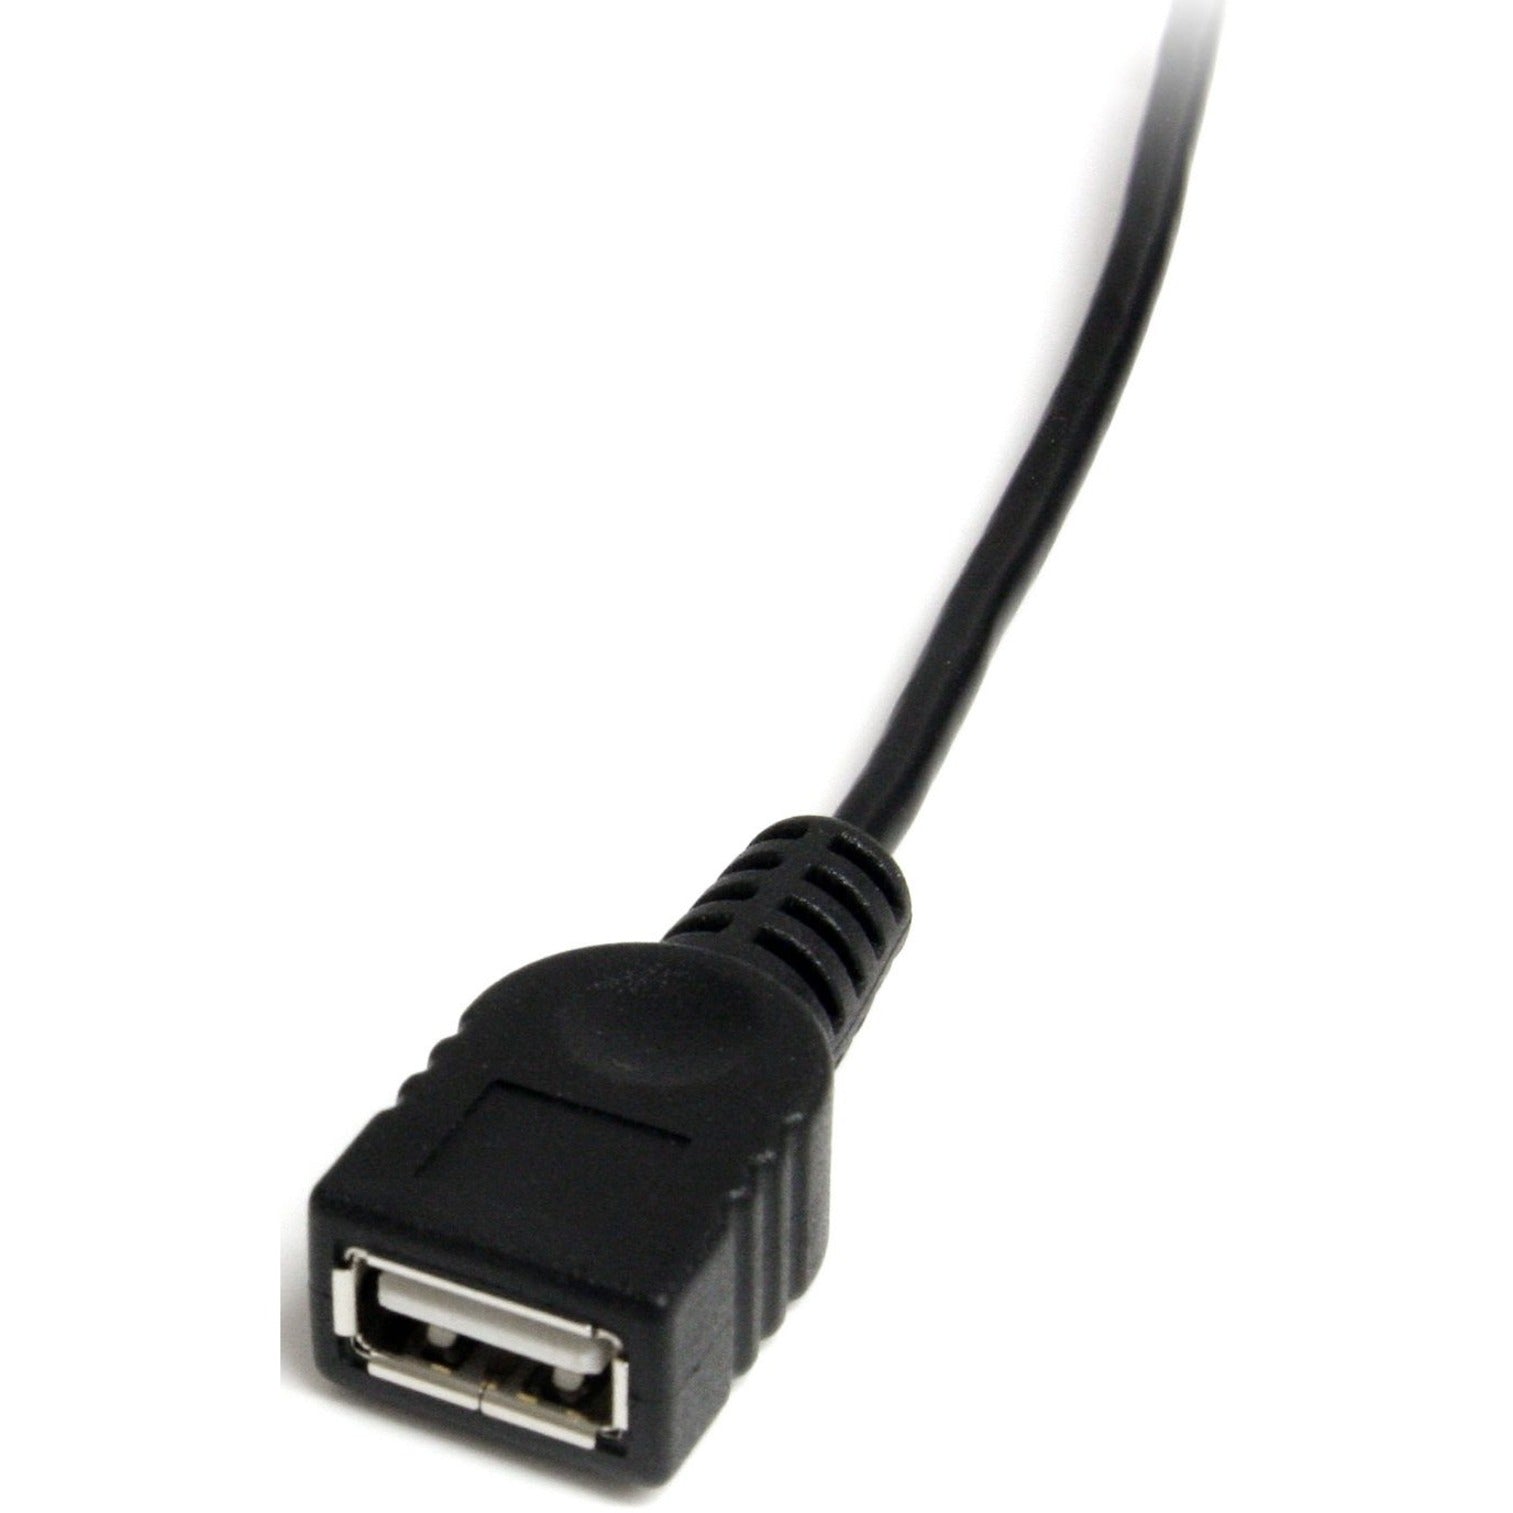 StarTech.com USBMUSBFM1 1 ft Mini USB 2.0 Cable, USB A to Mini B F/M, Data Transfer Cable